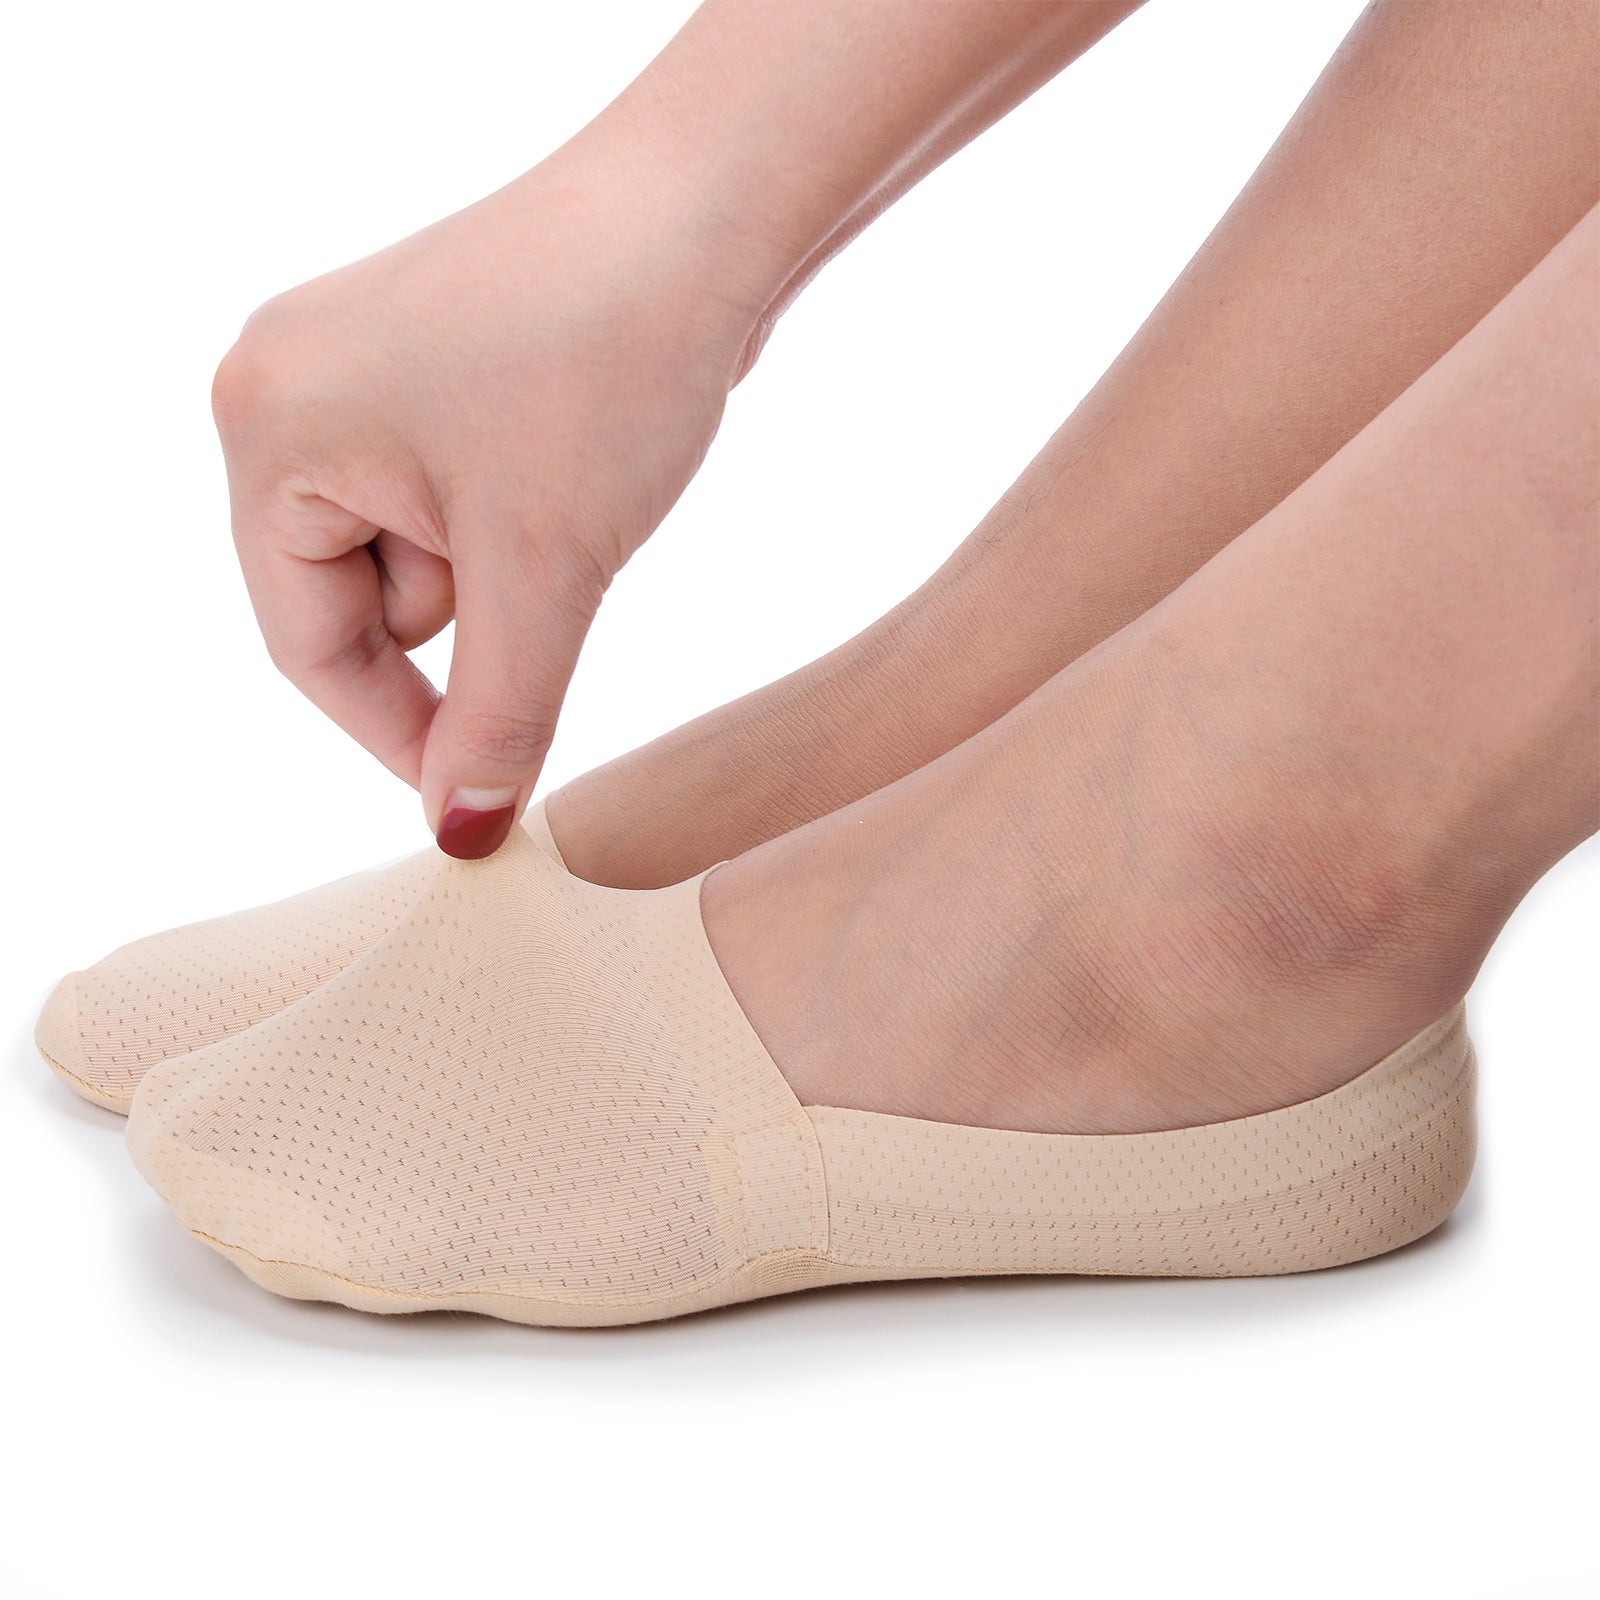 Soxbang No Show Socks Women Thin & Cooling Liner Socks with Non